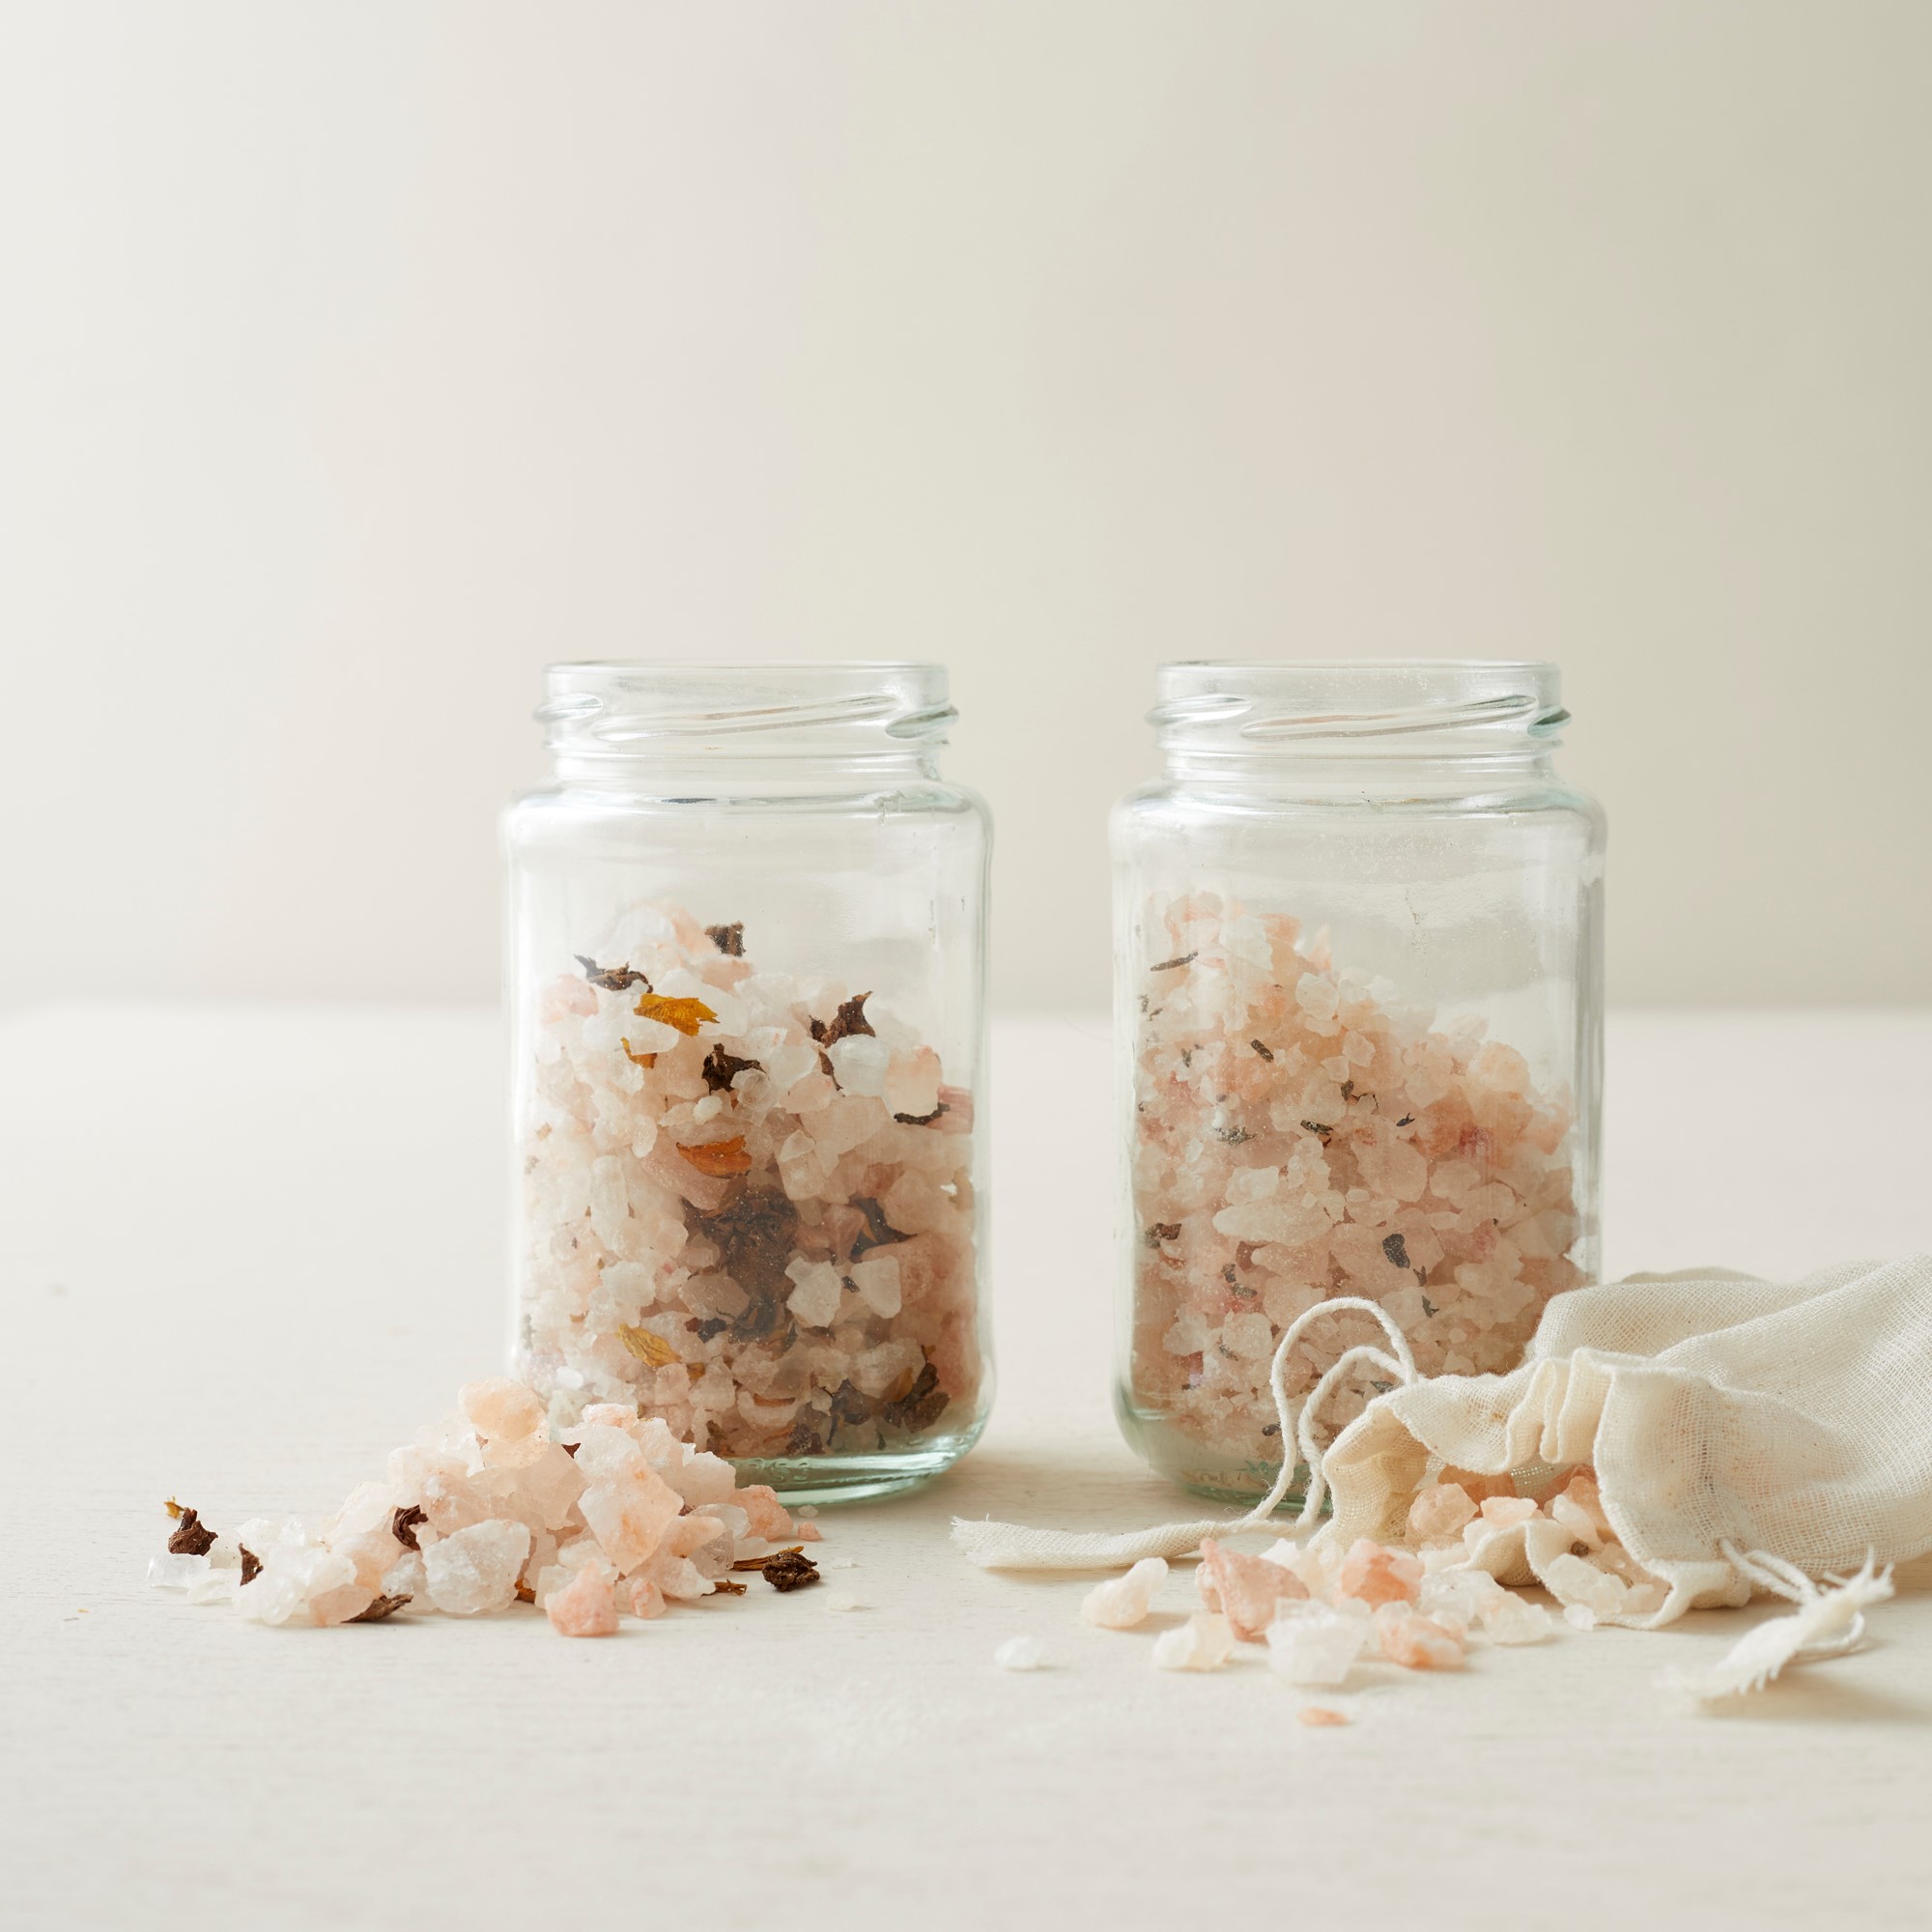 Bath salts in jar